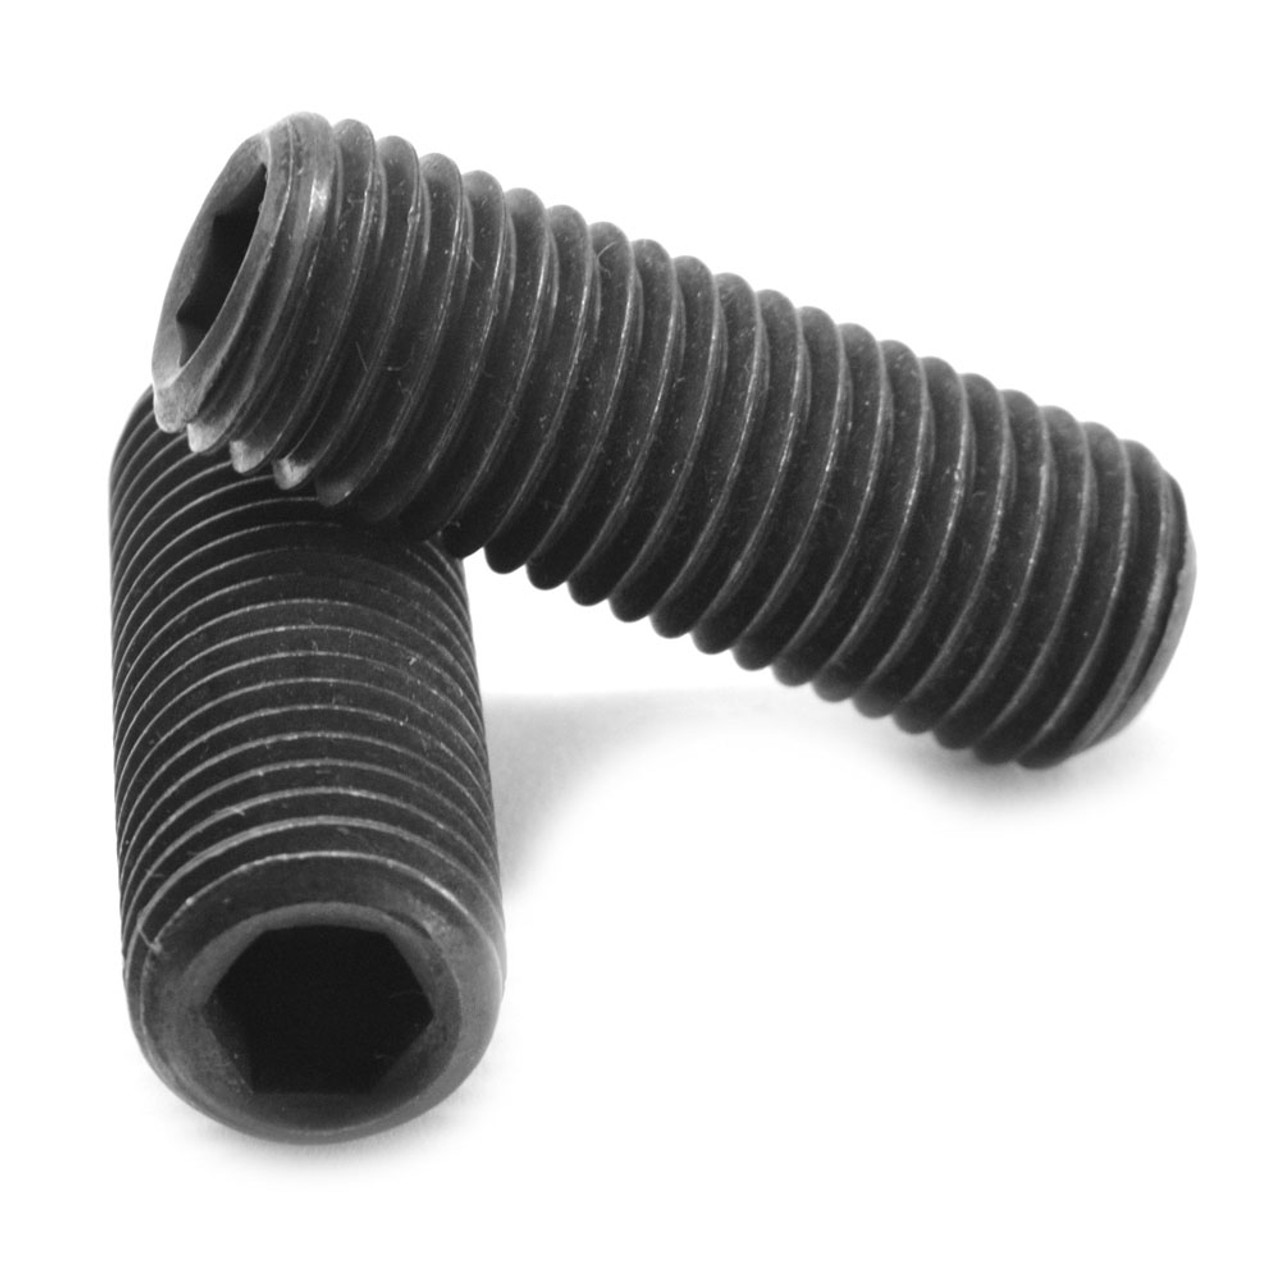 M5 x 0.80 x 18 MM Coarse Thread ISO 4029 / DIN 916 Class 45H Socket Set Screw Cup Point Alloy Steel Black Oxide